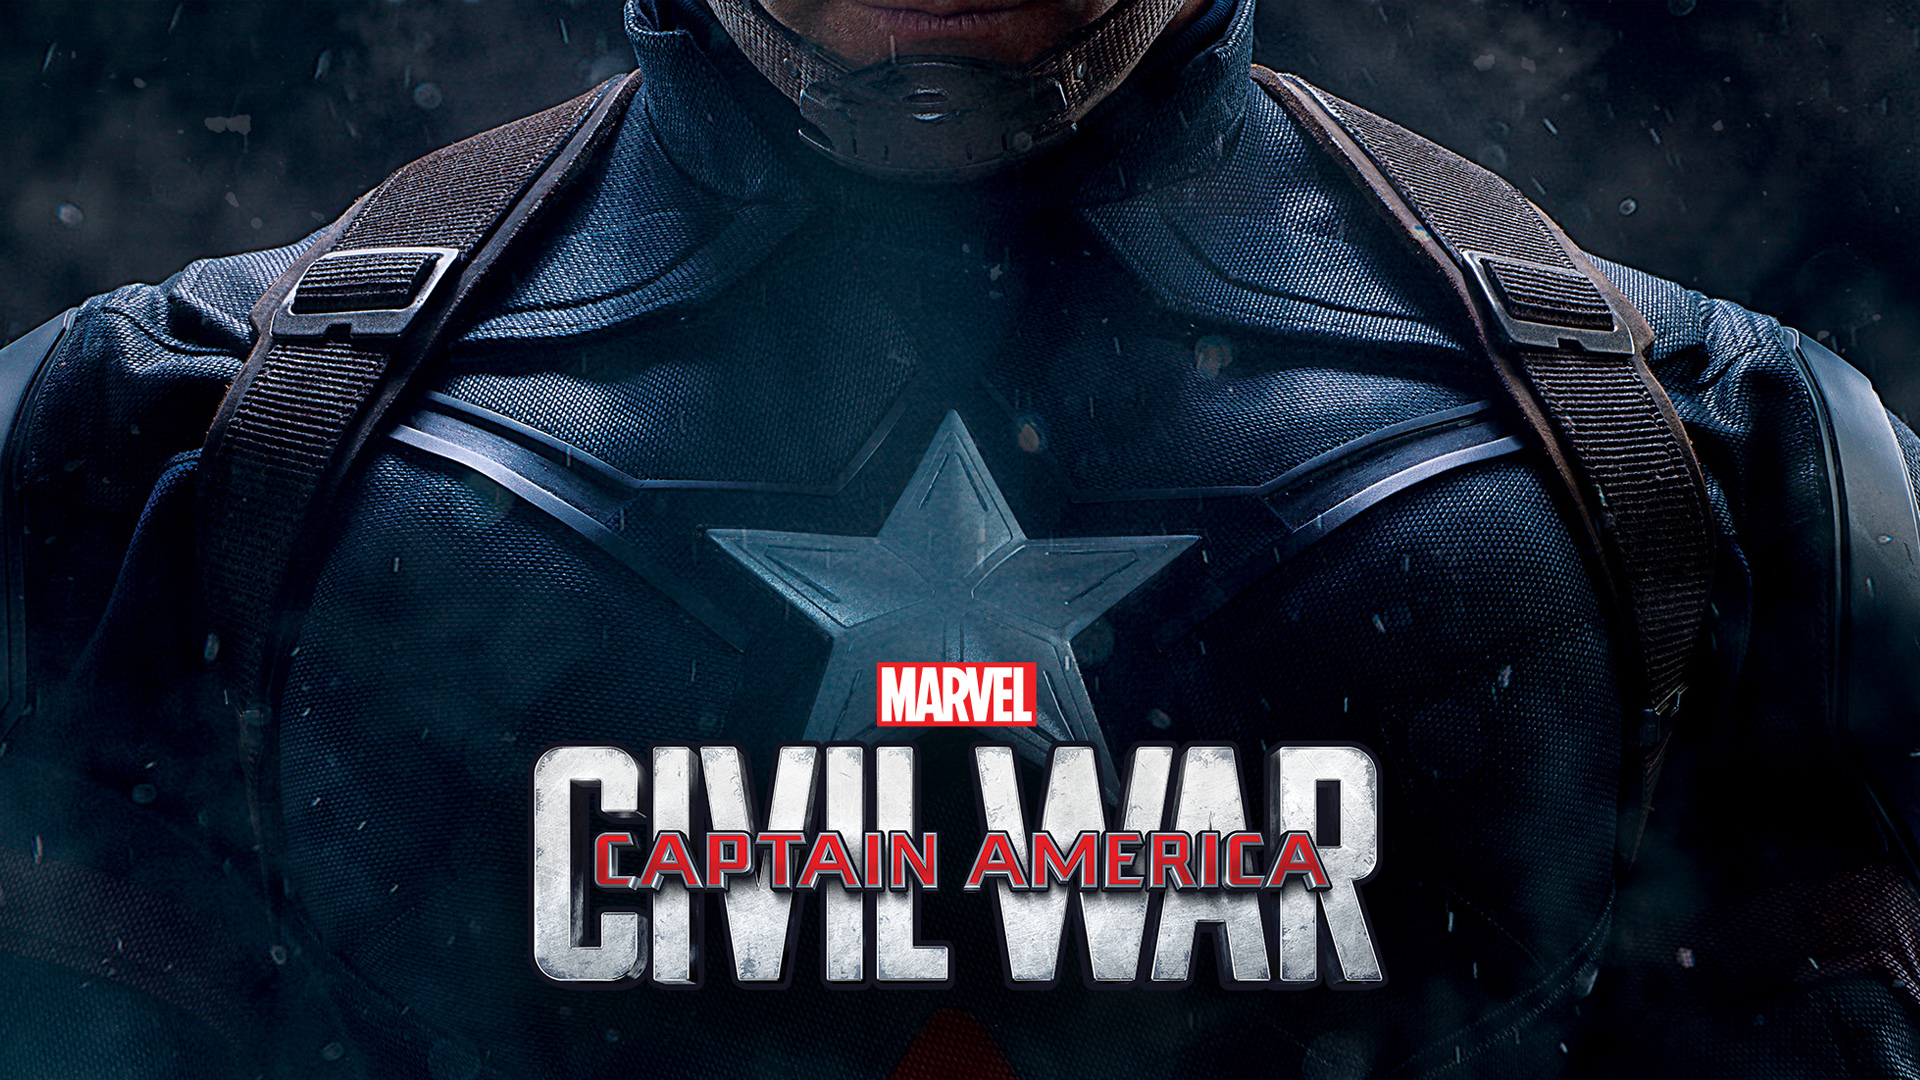 Captain America Civil War Images